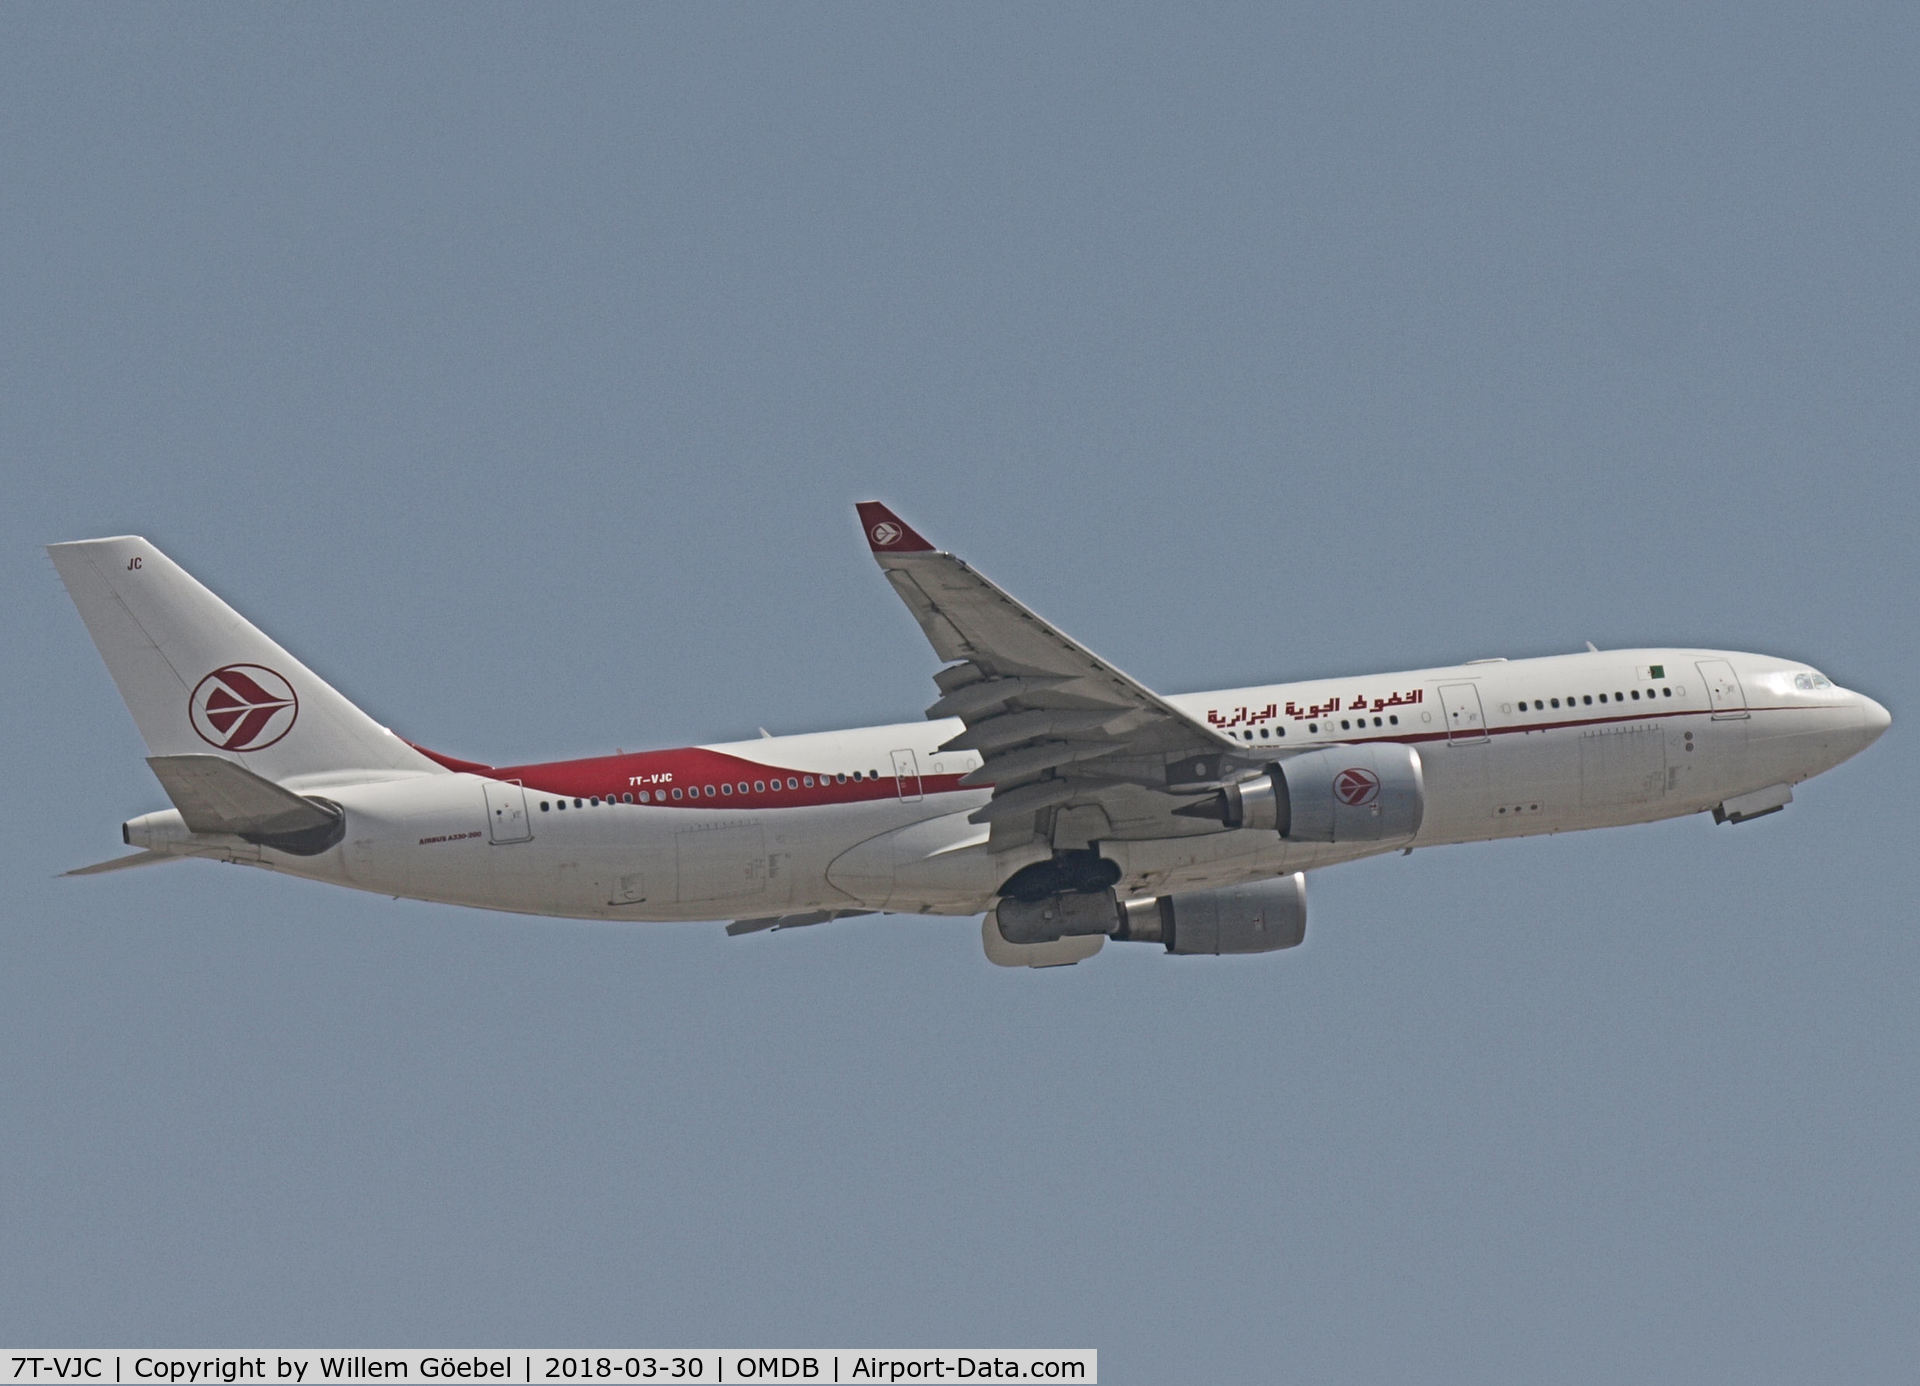 7T-VJC, 2015 Airbus A330-202 C/N 1649, Take off from DUBAI INTERNATIONAL Airport